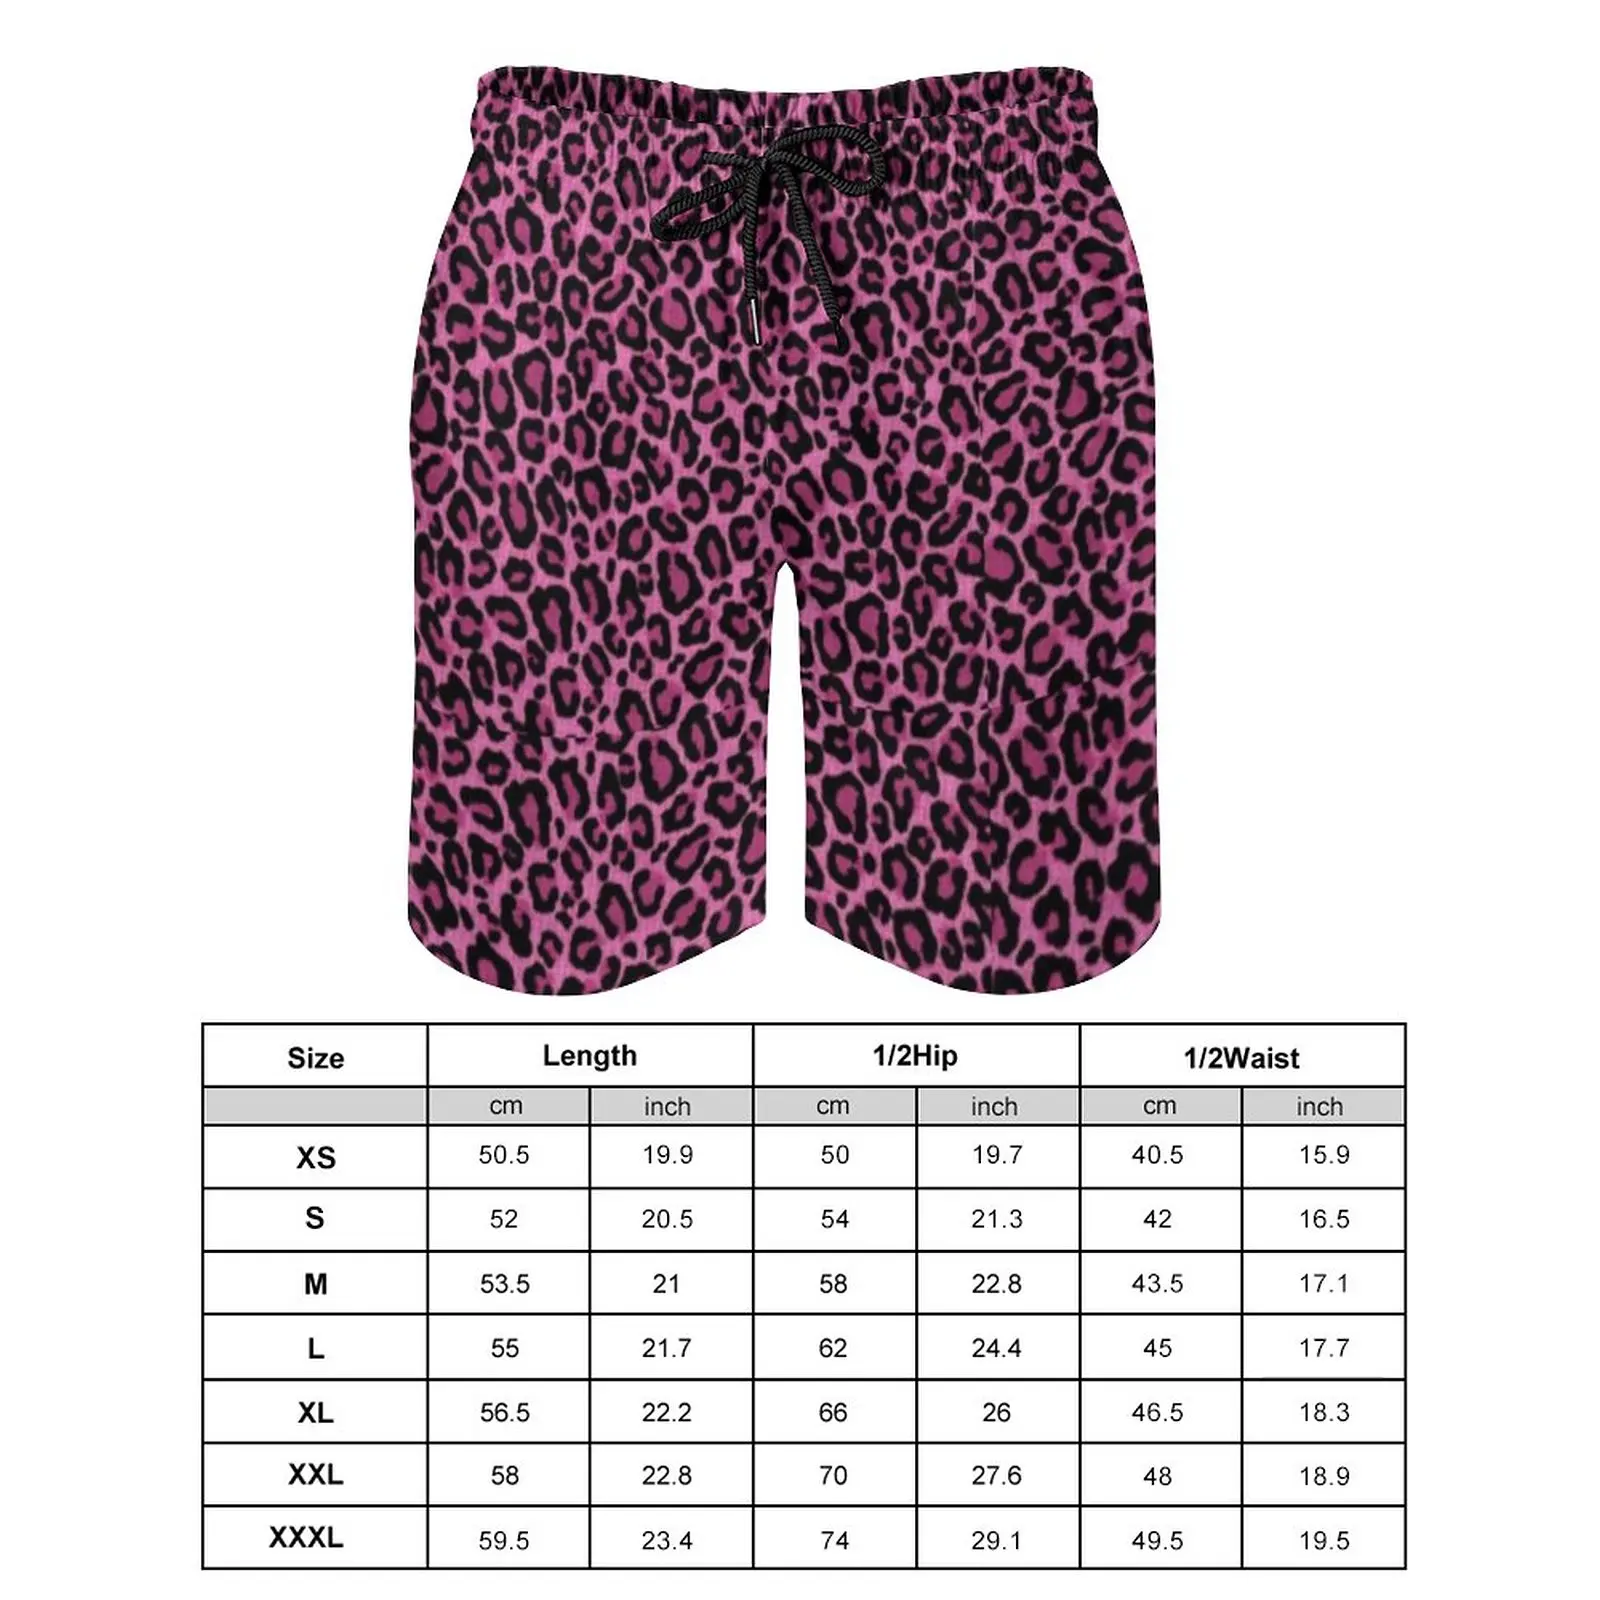 https://ae01.alicdn.com/kf/S1207b93d4c48482a9a00b4554aca5a19m/Funky-leopard-print-board-shorts-de-alta-qualidade-rosa-preto-manchas-impress-o-placa-cal-as.jpg